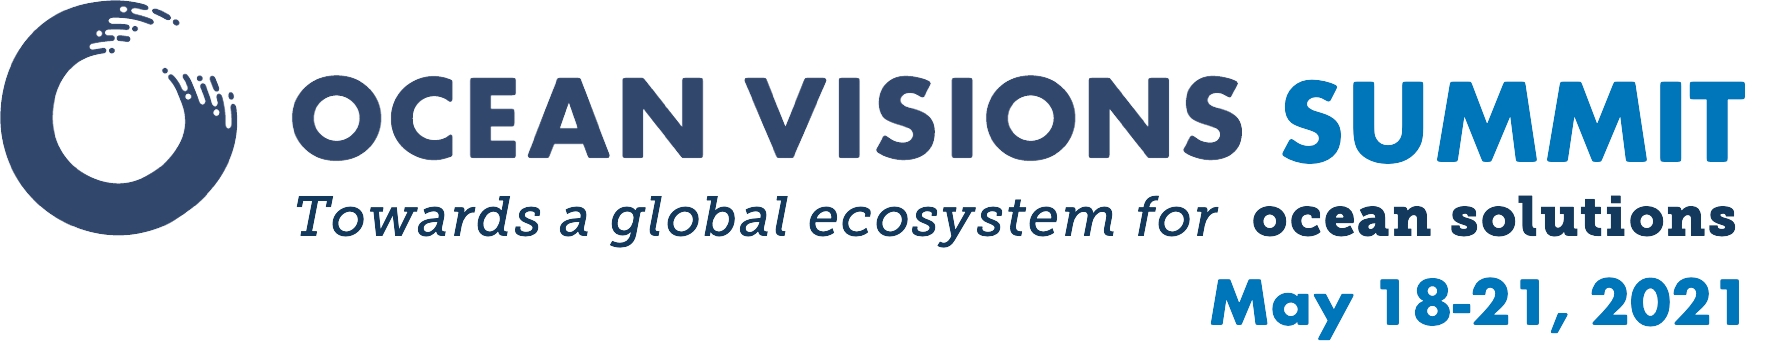 Ocean Visions Summit logo